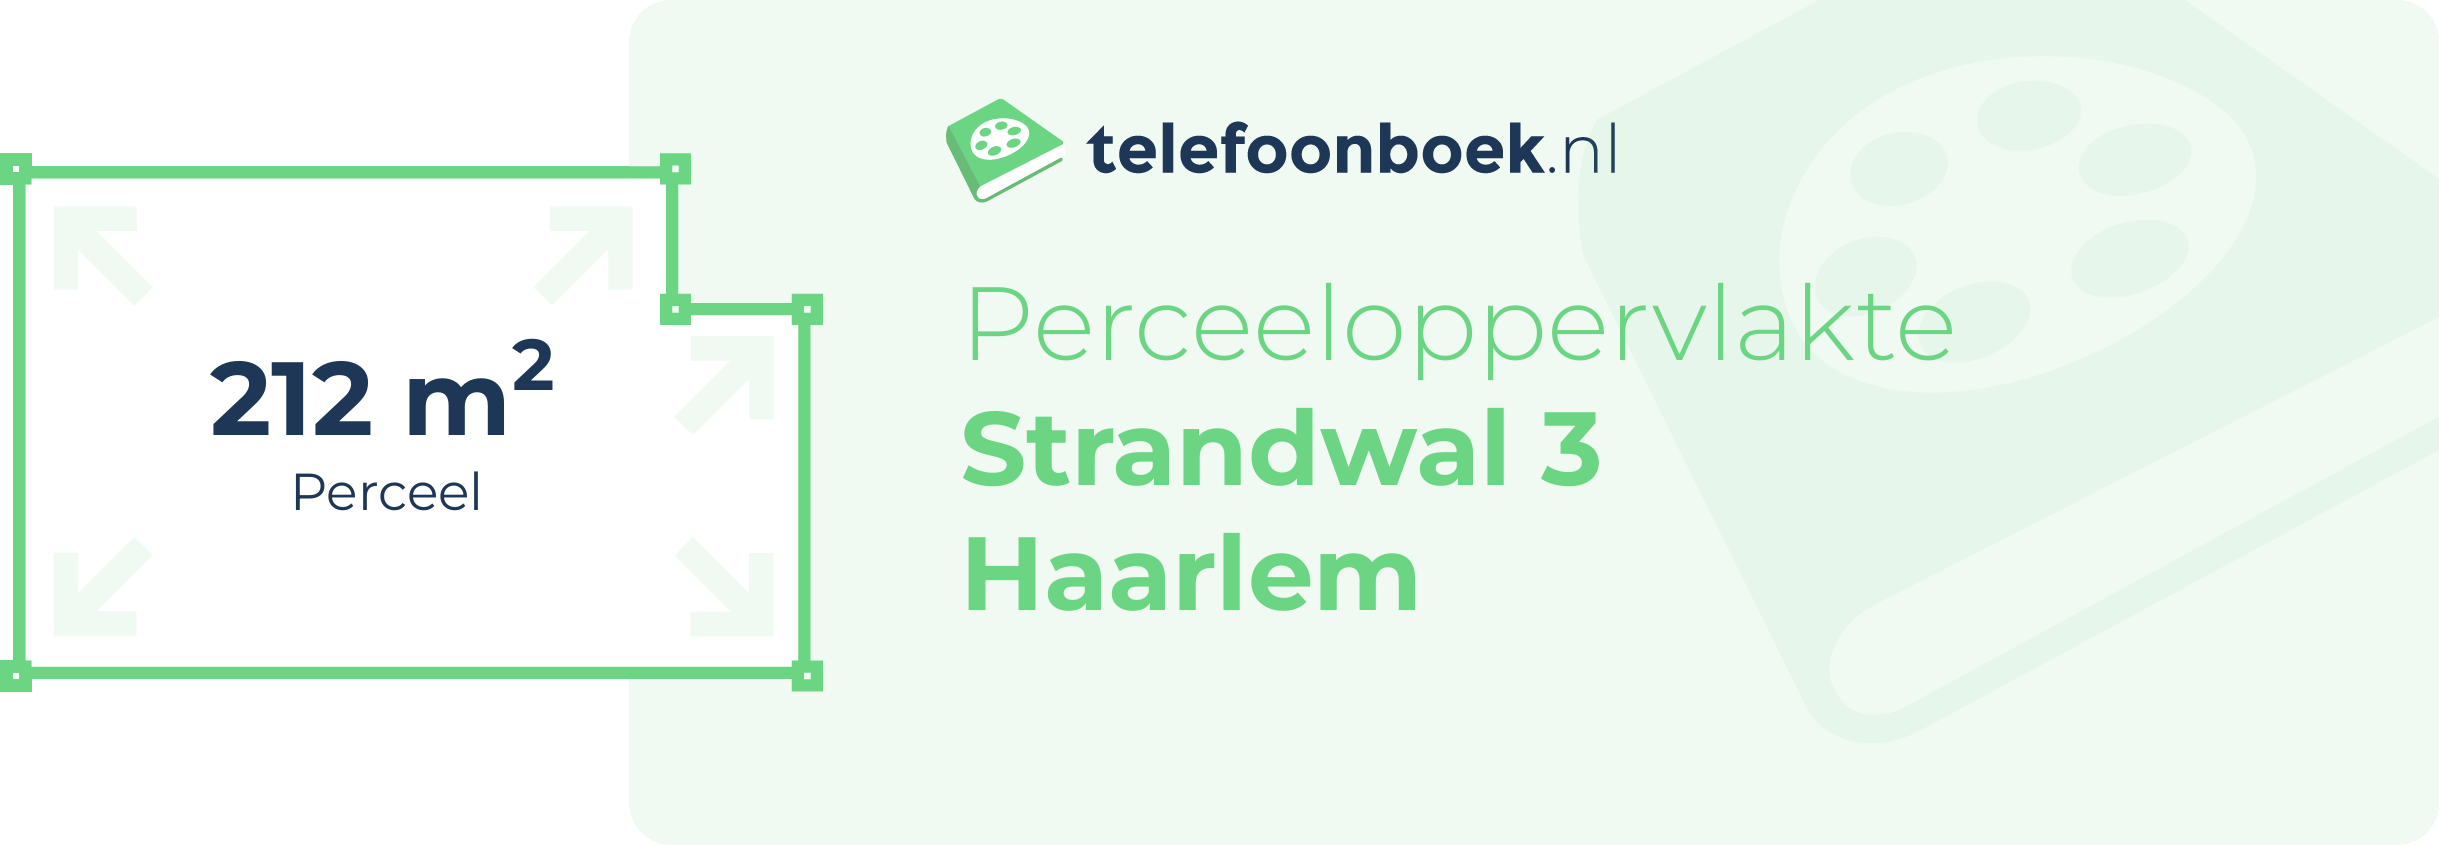 Perceeloppervlakte Strandwal 3 Haarlem